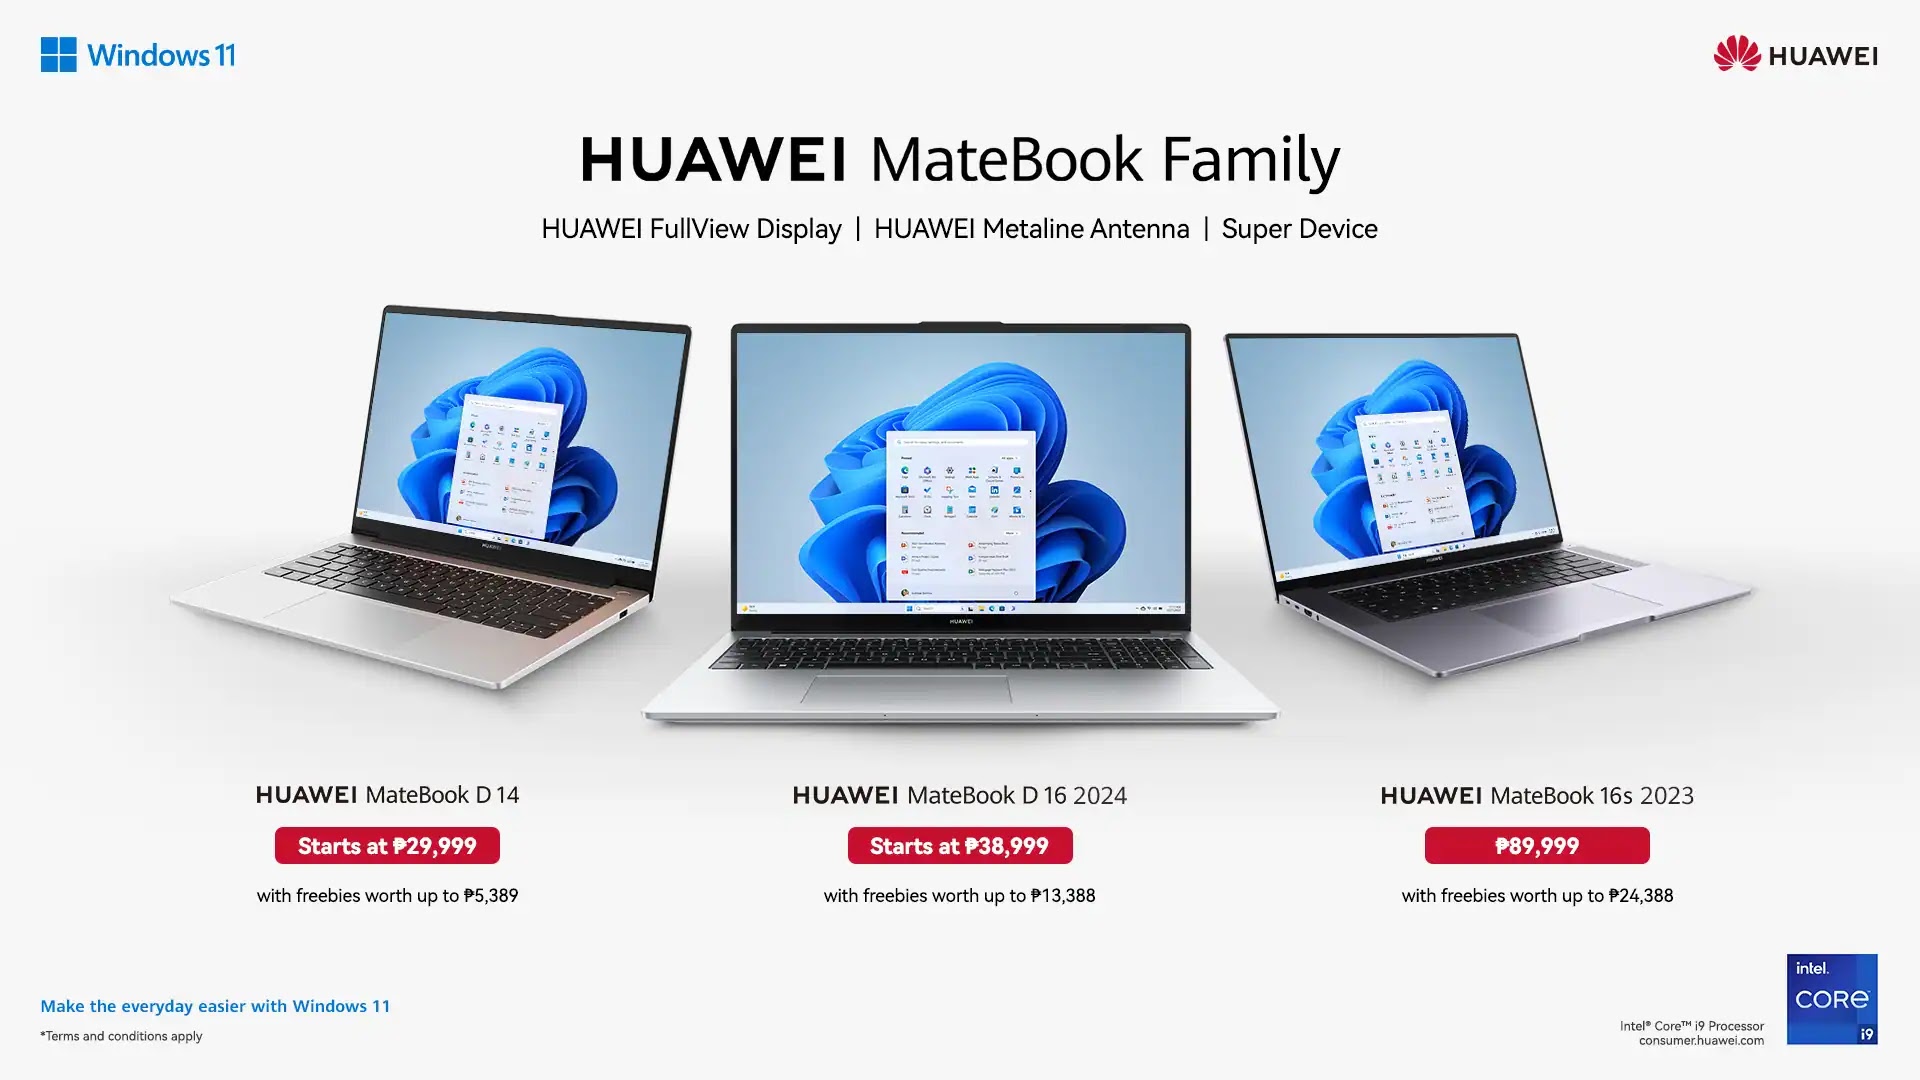 HUAWEI MateBook lineup